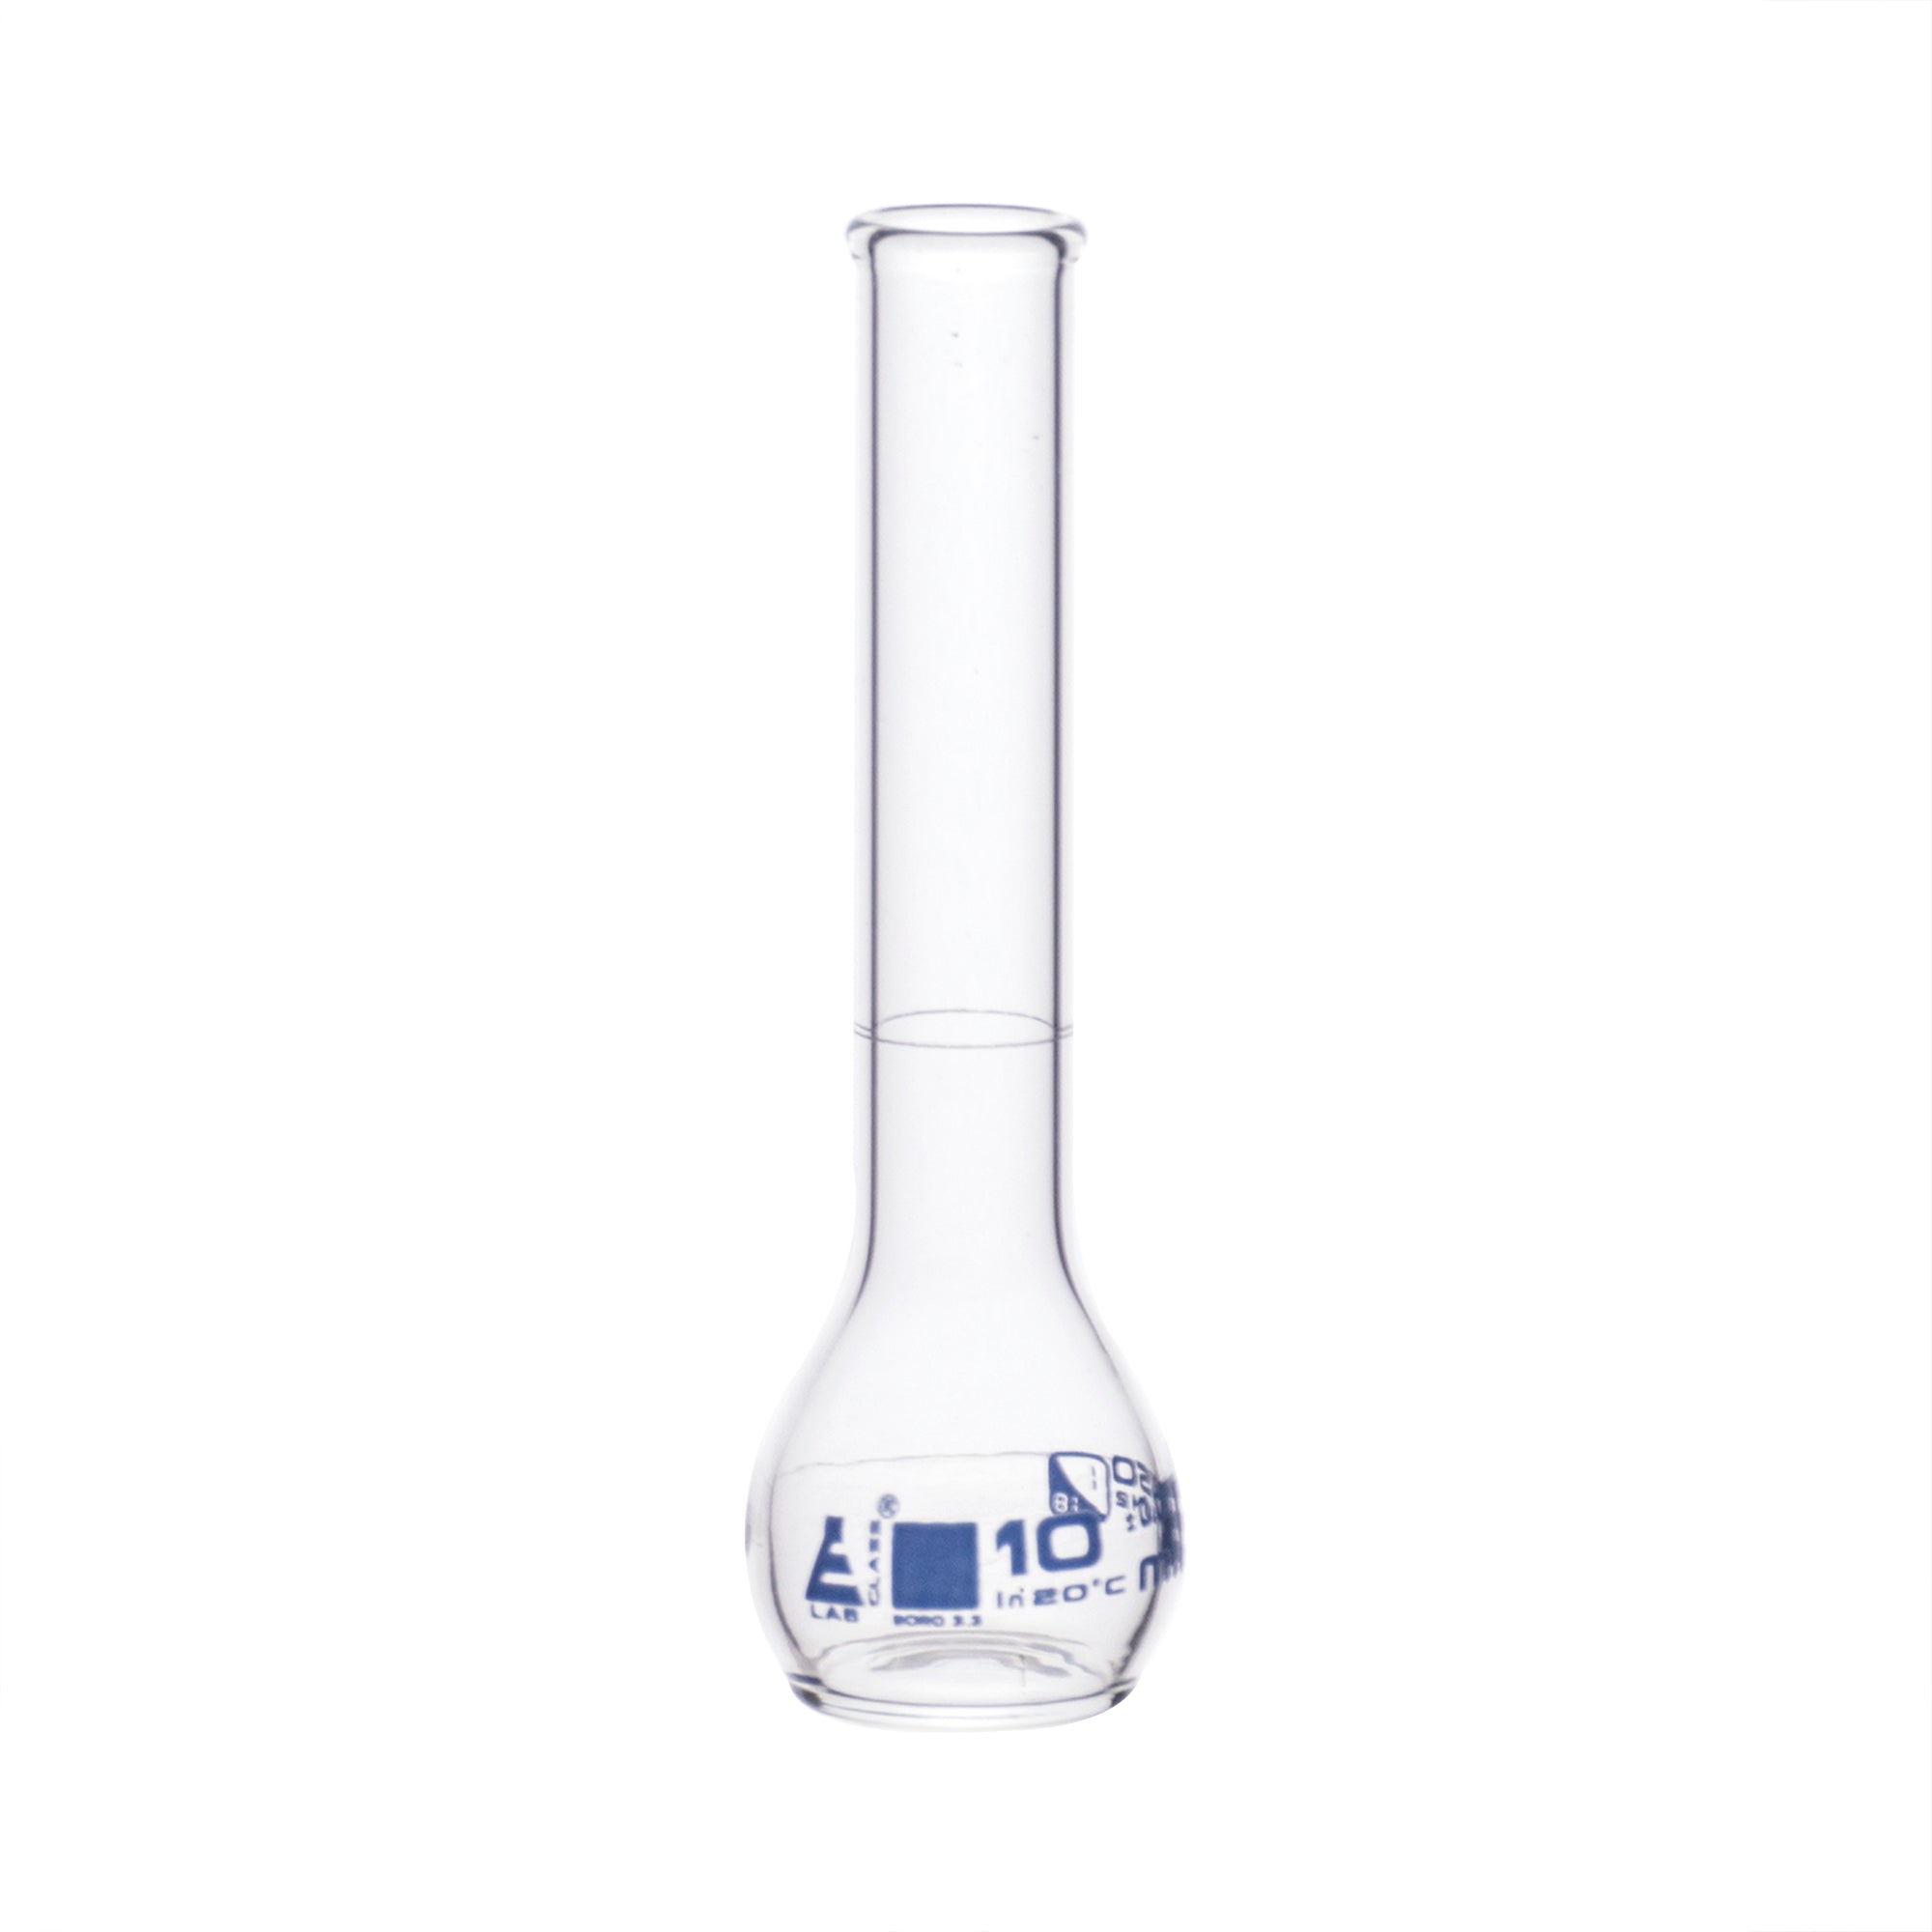 Borosilicate Glass Volumetric Flask with Beaded Rim, 10ml, Class B, Blue Print, Autoclavable